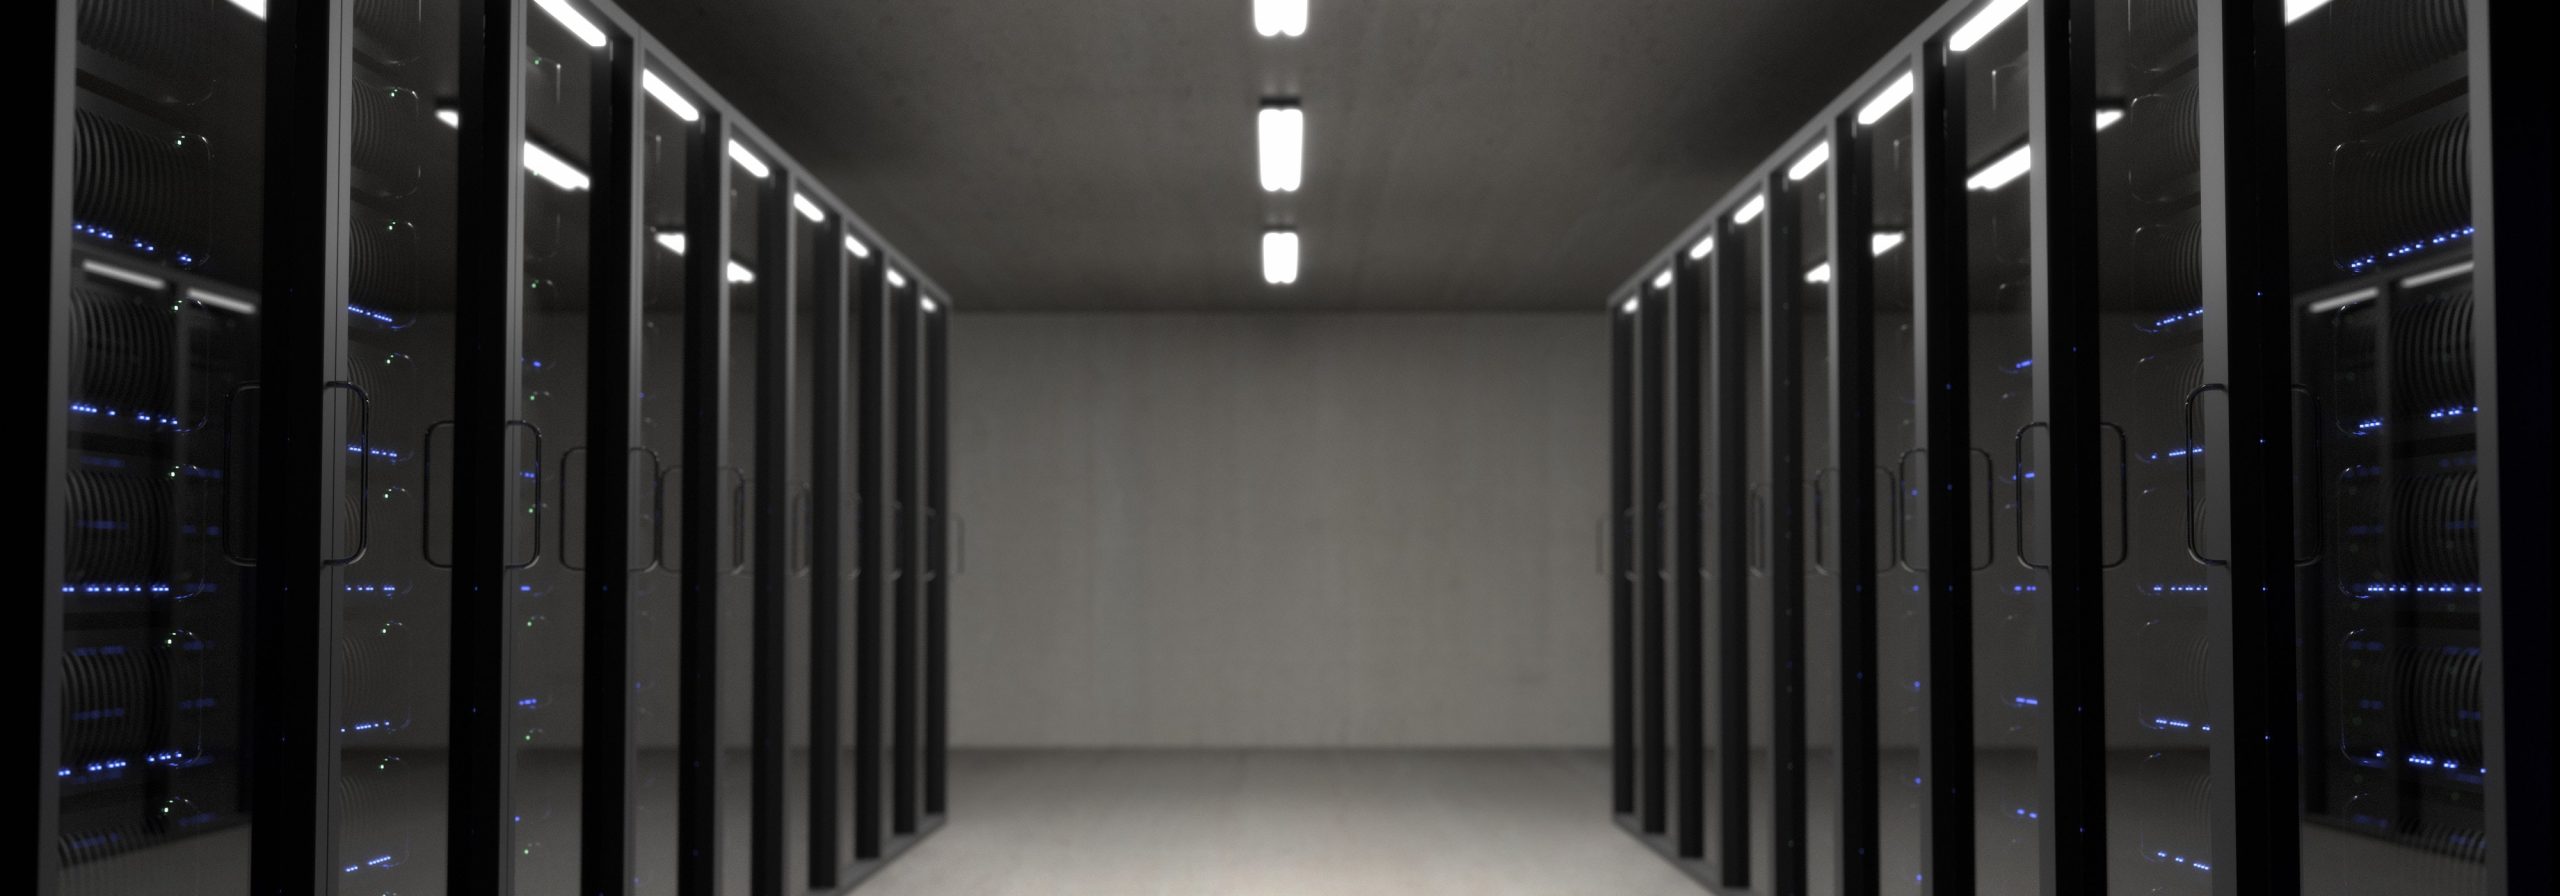 Server Room filled with server cabinets